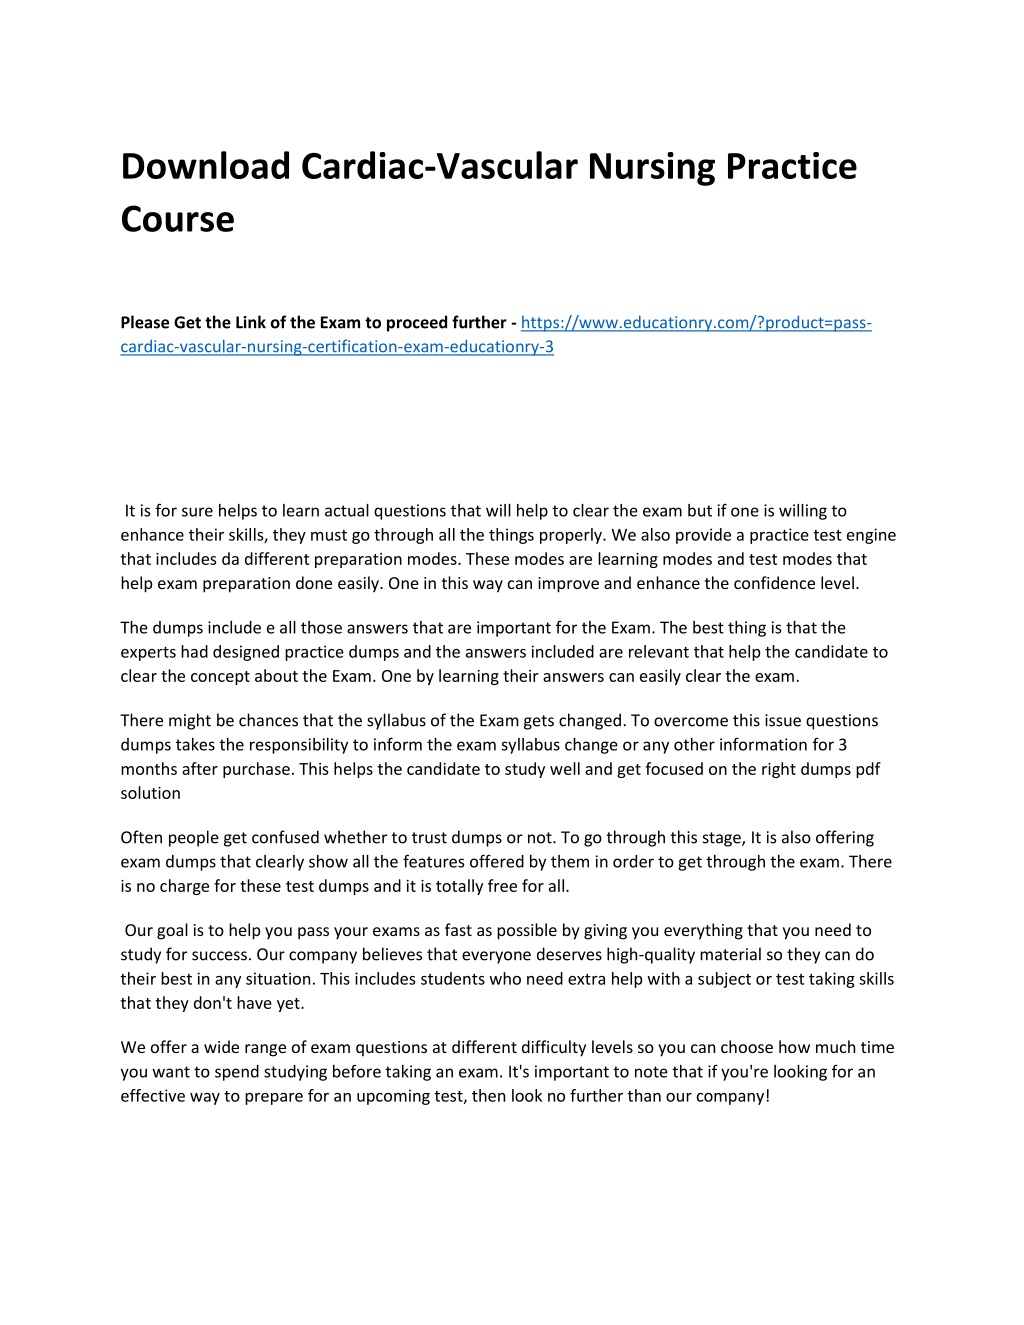 PPT Download Cardiac Vascular Nursing Practice Course PowerPoint